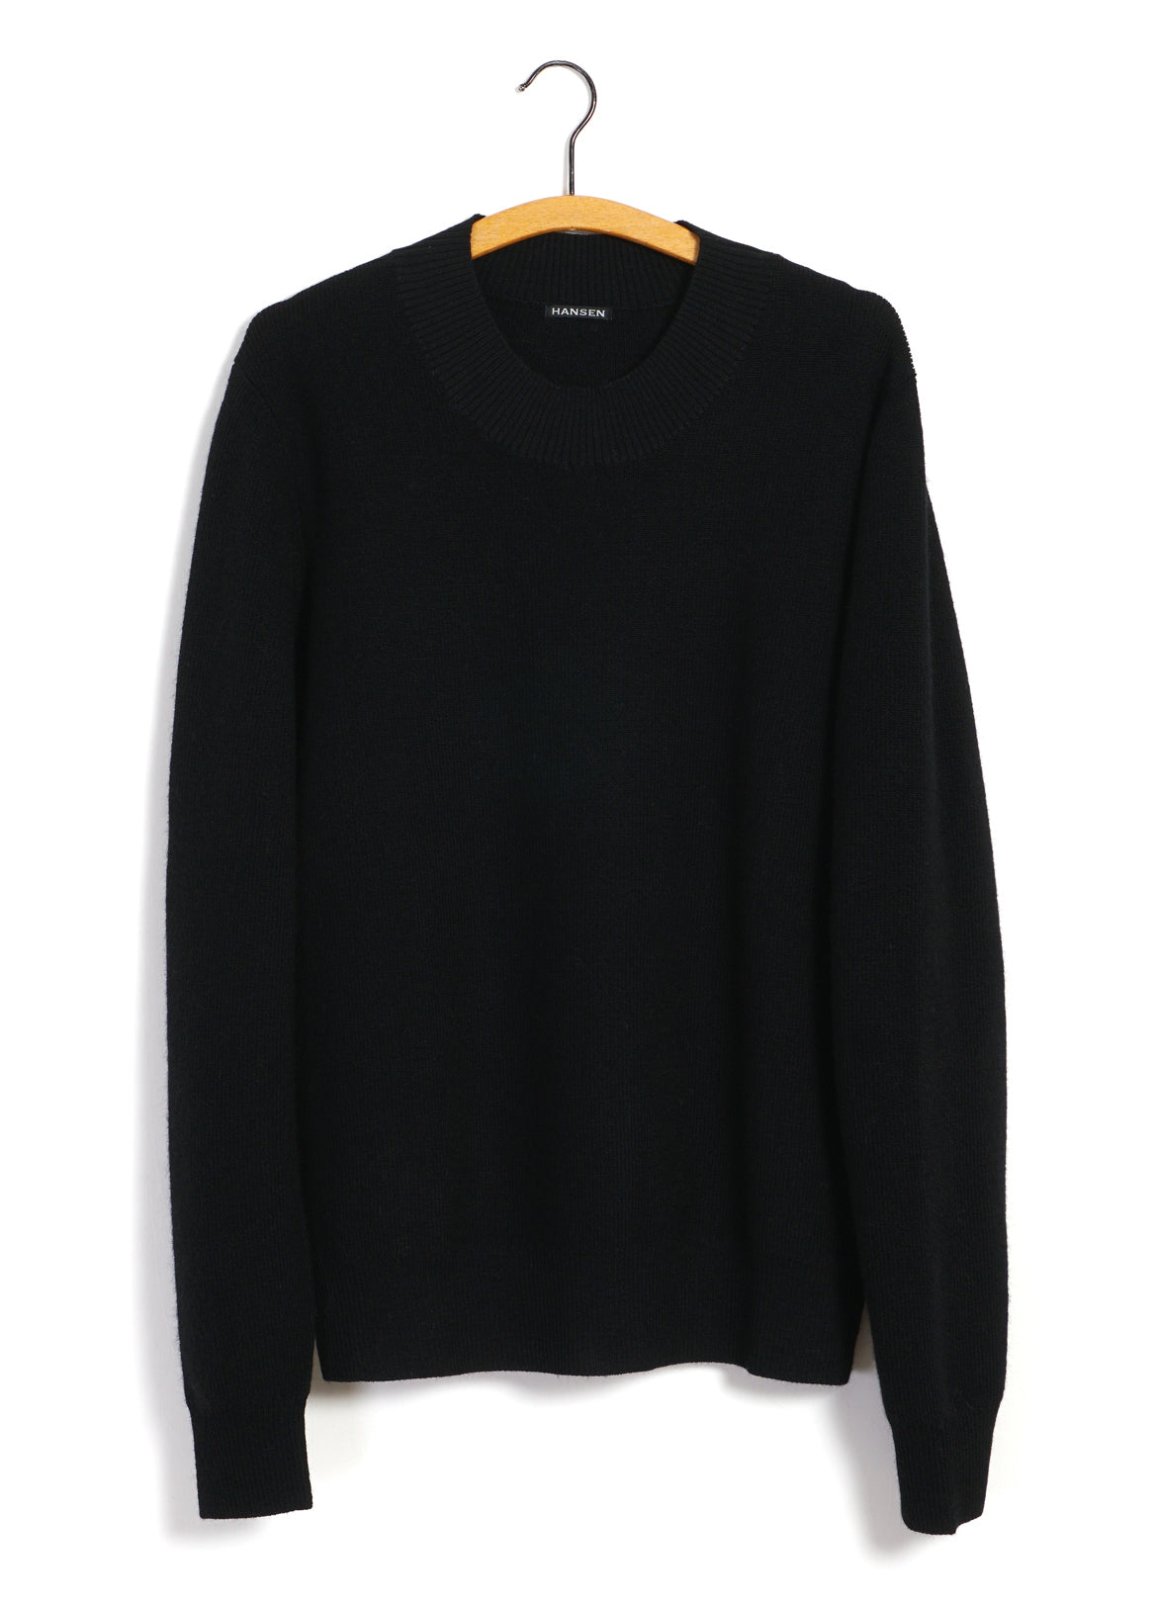 HANSEN GARMENTS - ANDRE | Knitted Crew Neck Sweater | Black - HANSEN Garments